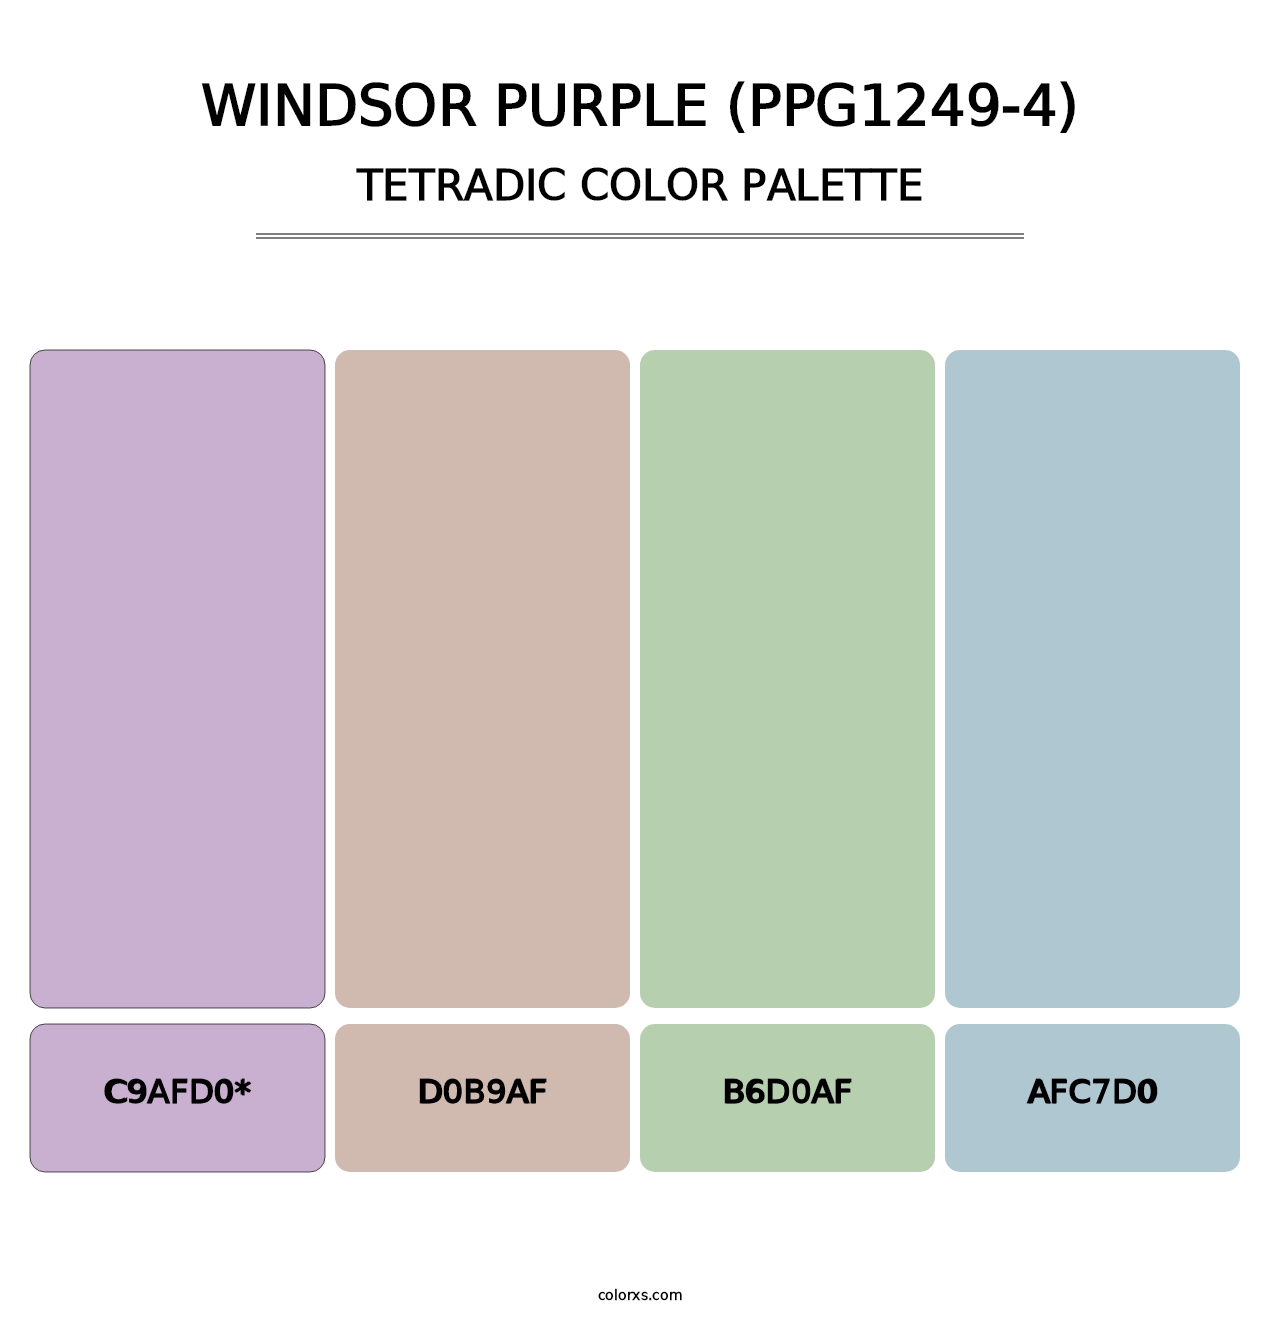 Windsor Purple (PPG1249-4) - Tetradic Color Palette